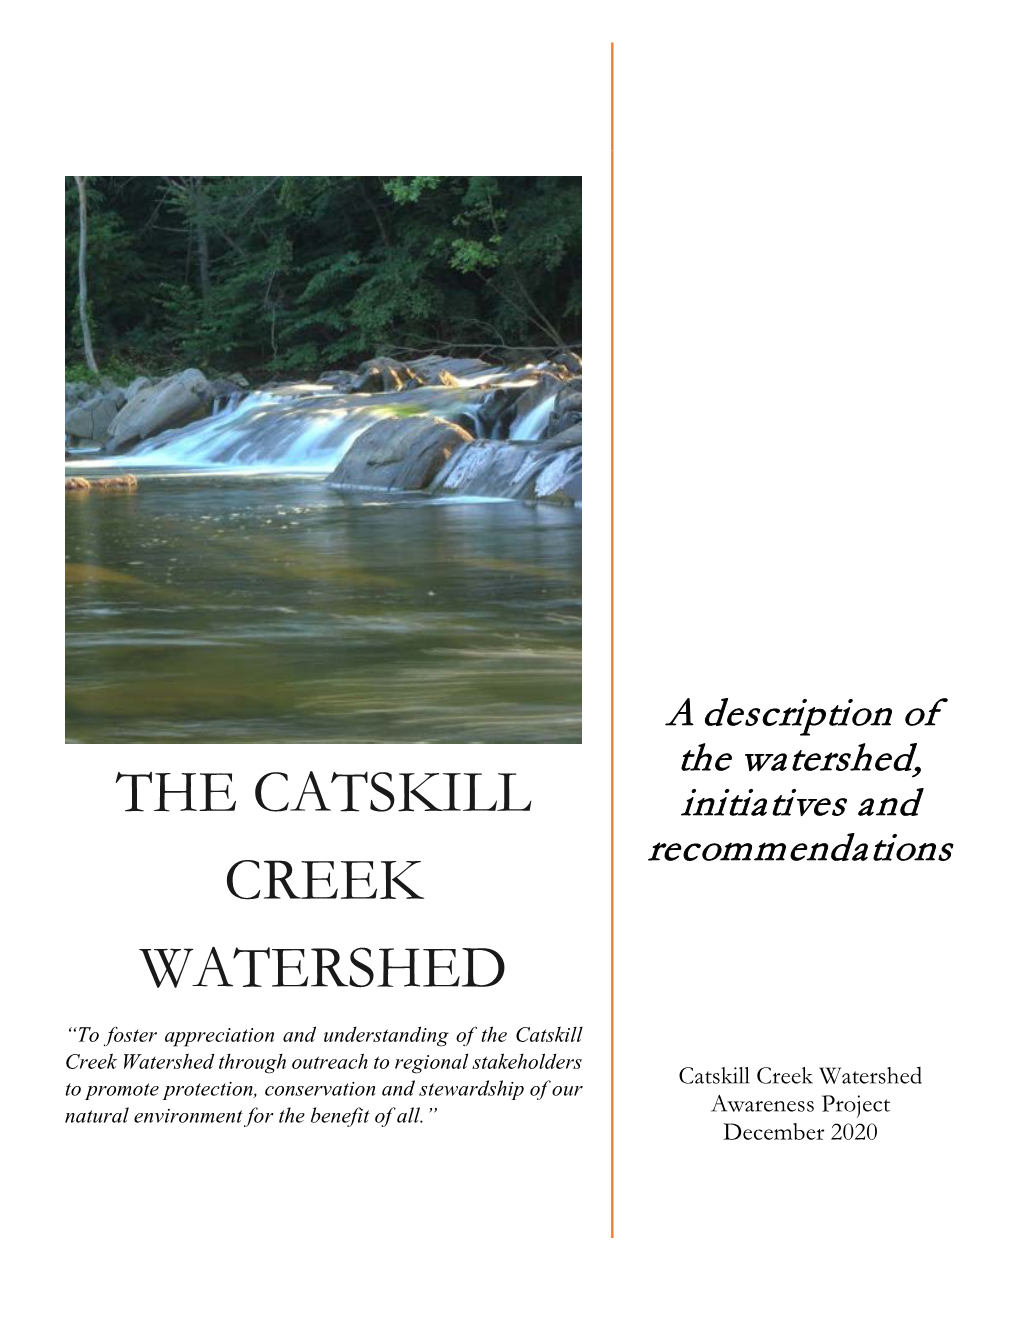 The Catskill Creek Watershed